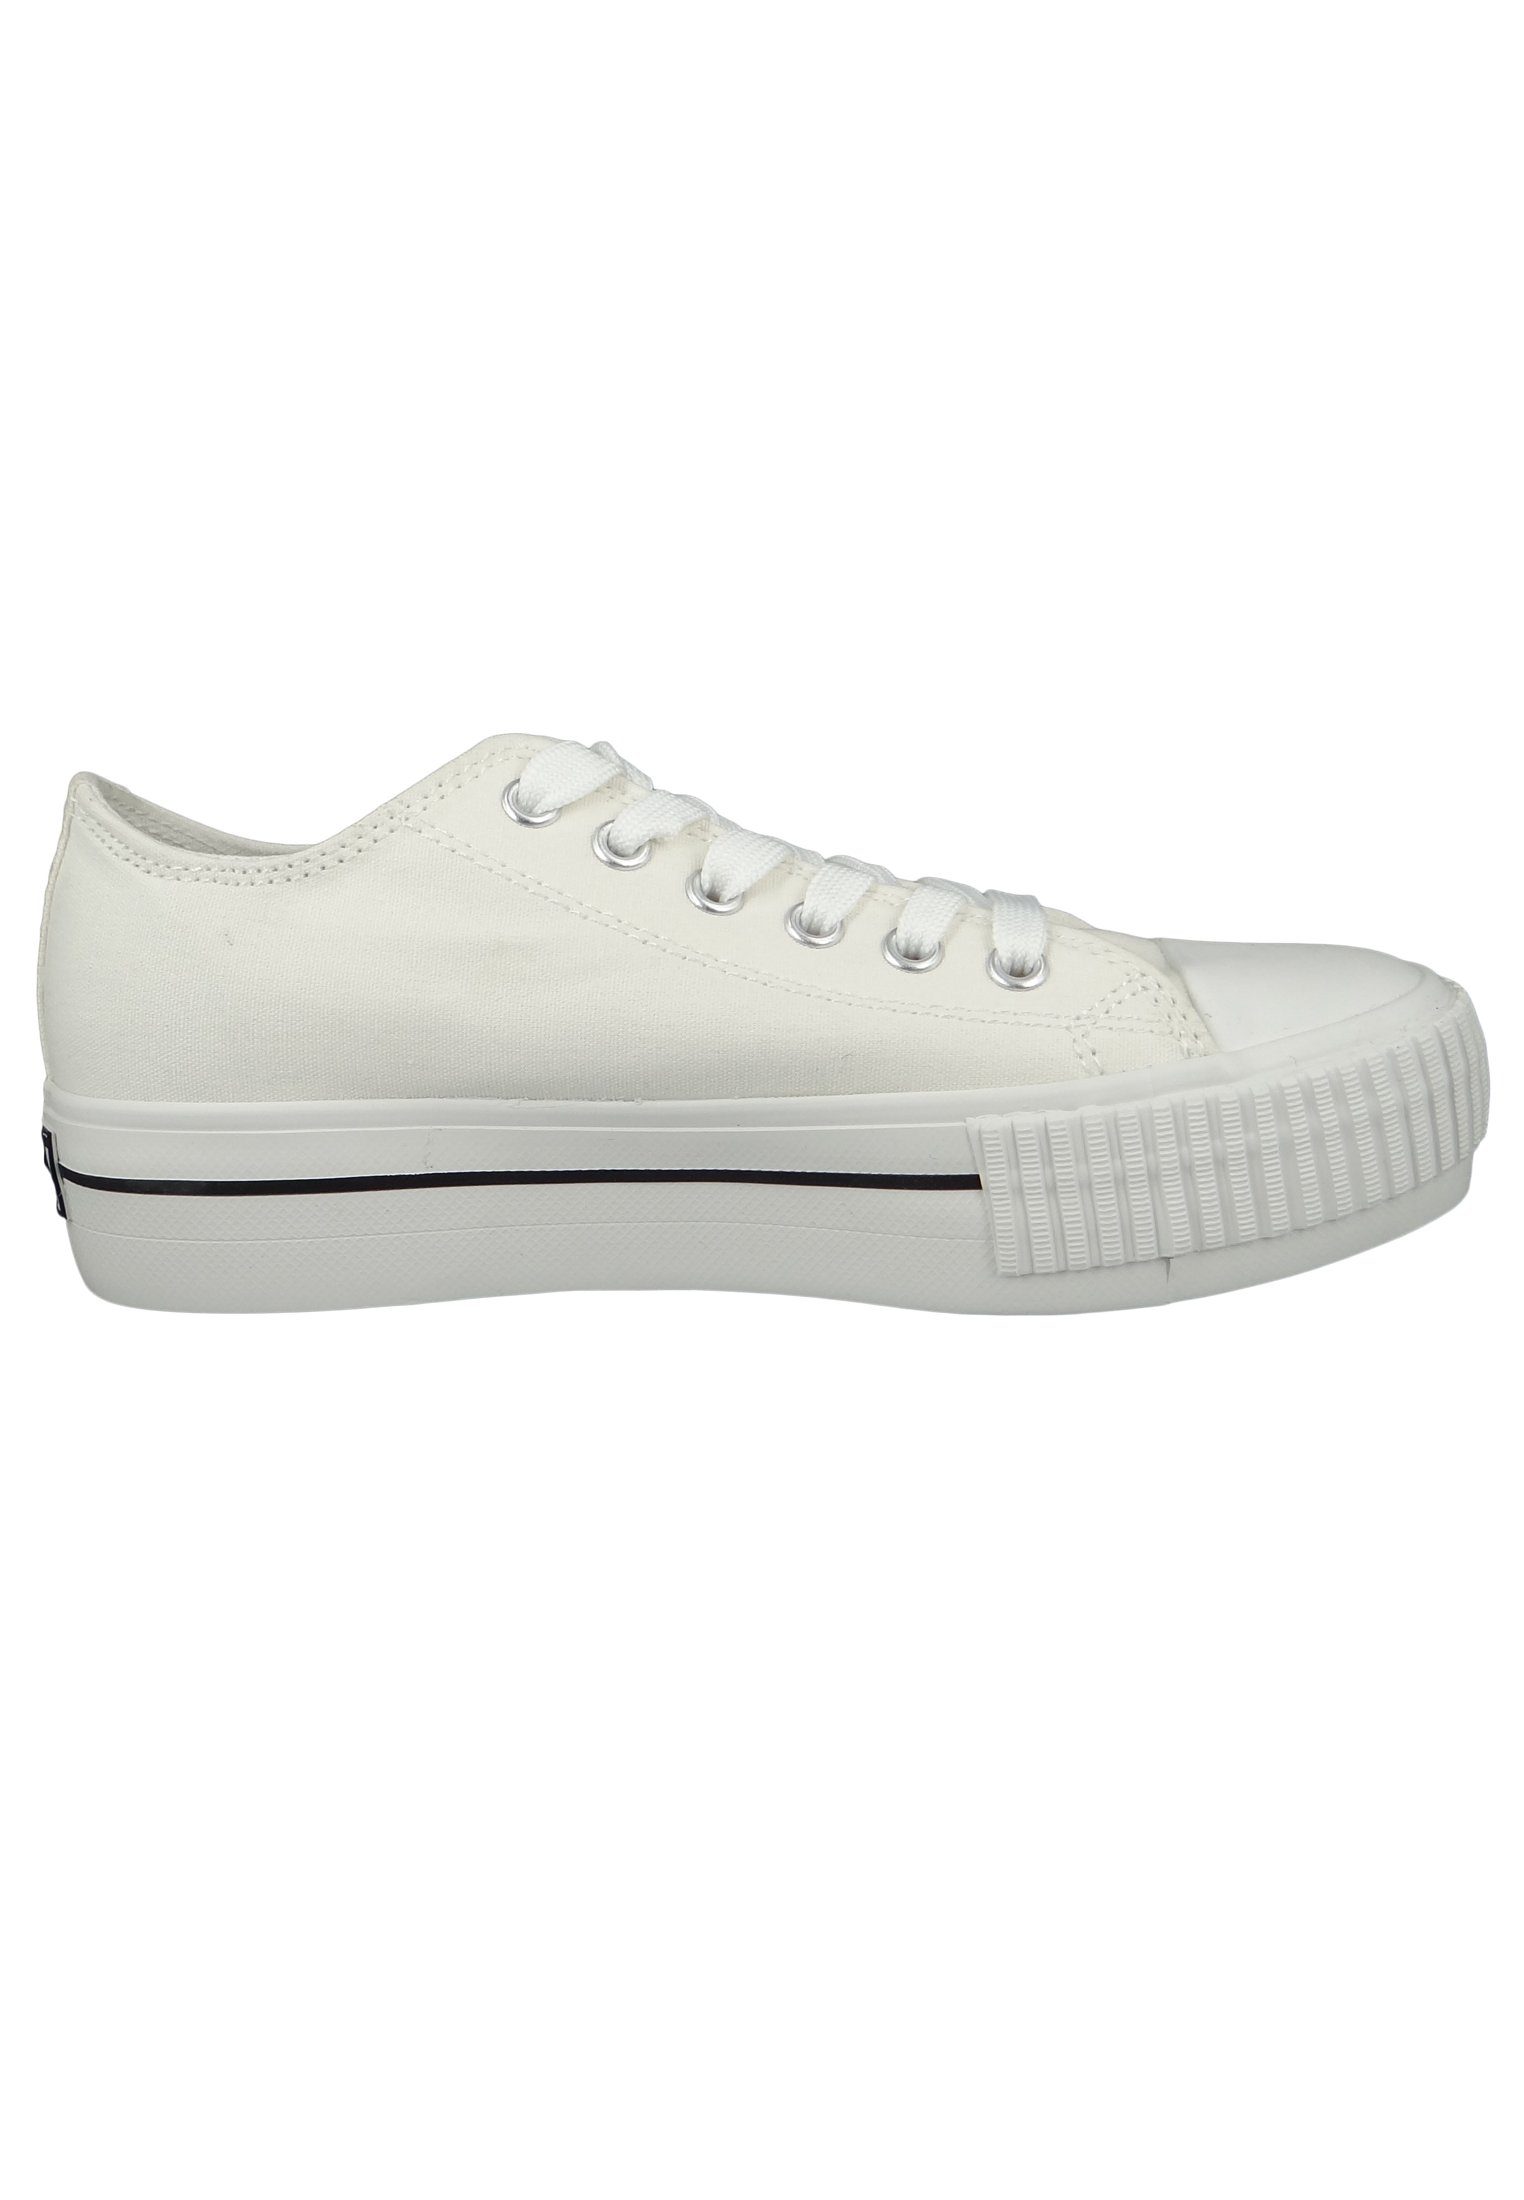 B43-3726-01 Platform British White Master Knights Sneaker